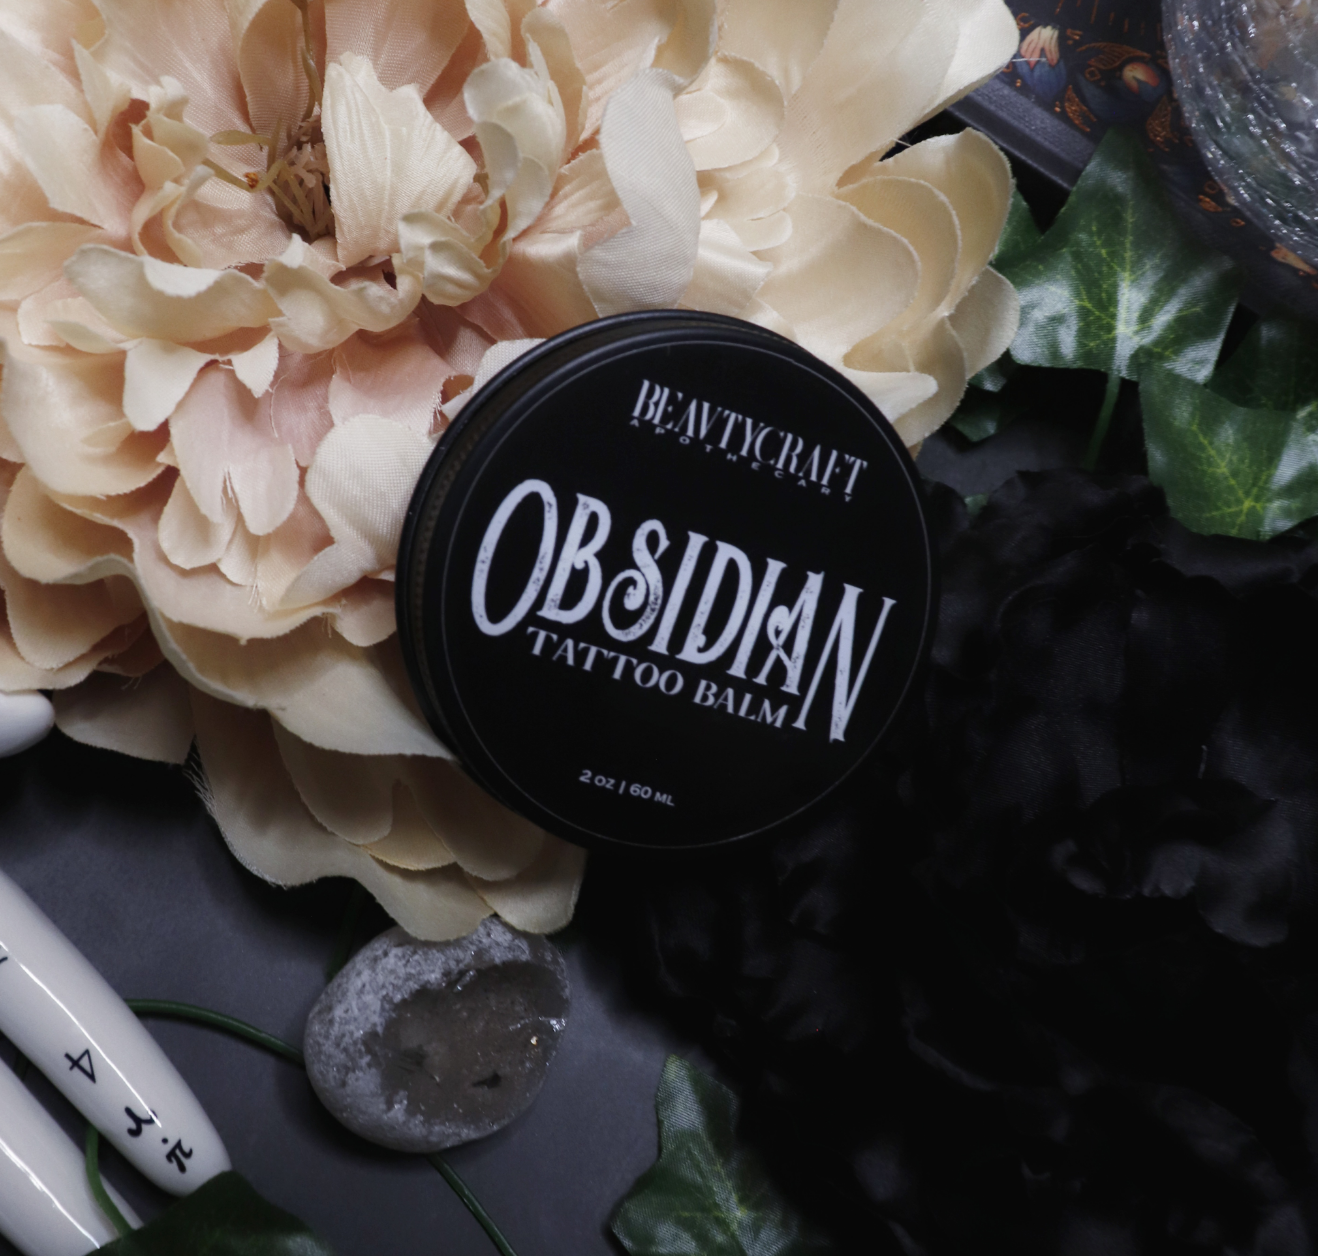 Obsidian | Tattoo Balm - BEAUTYCRAFT APOTHECARY